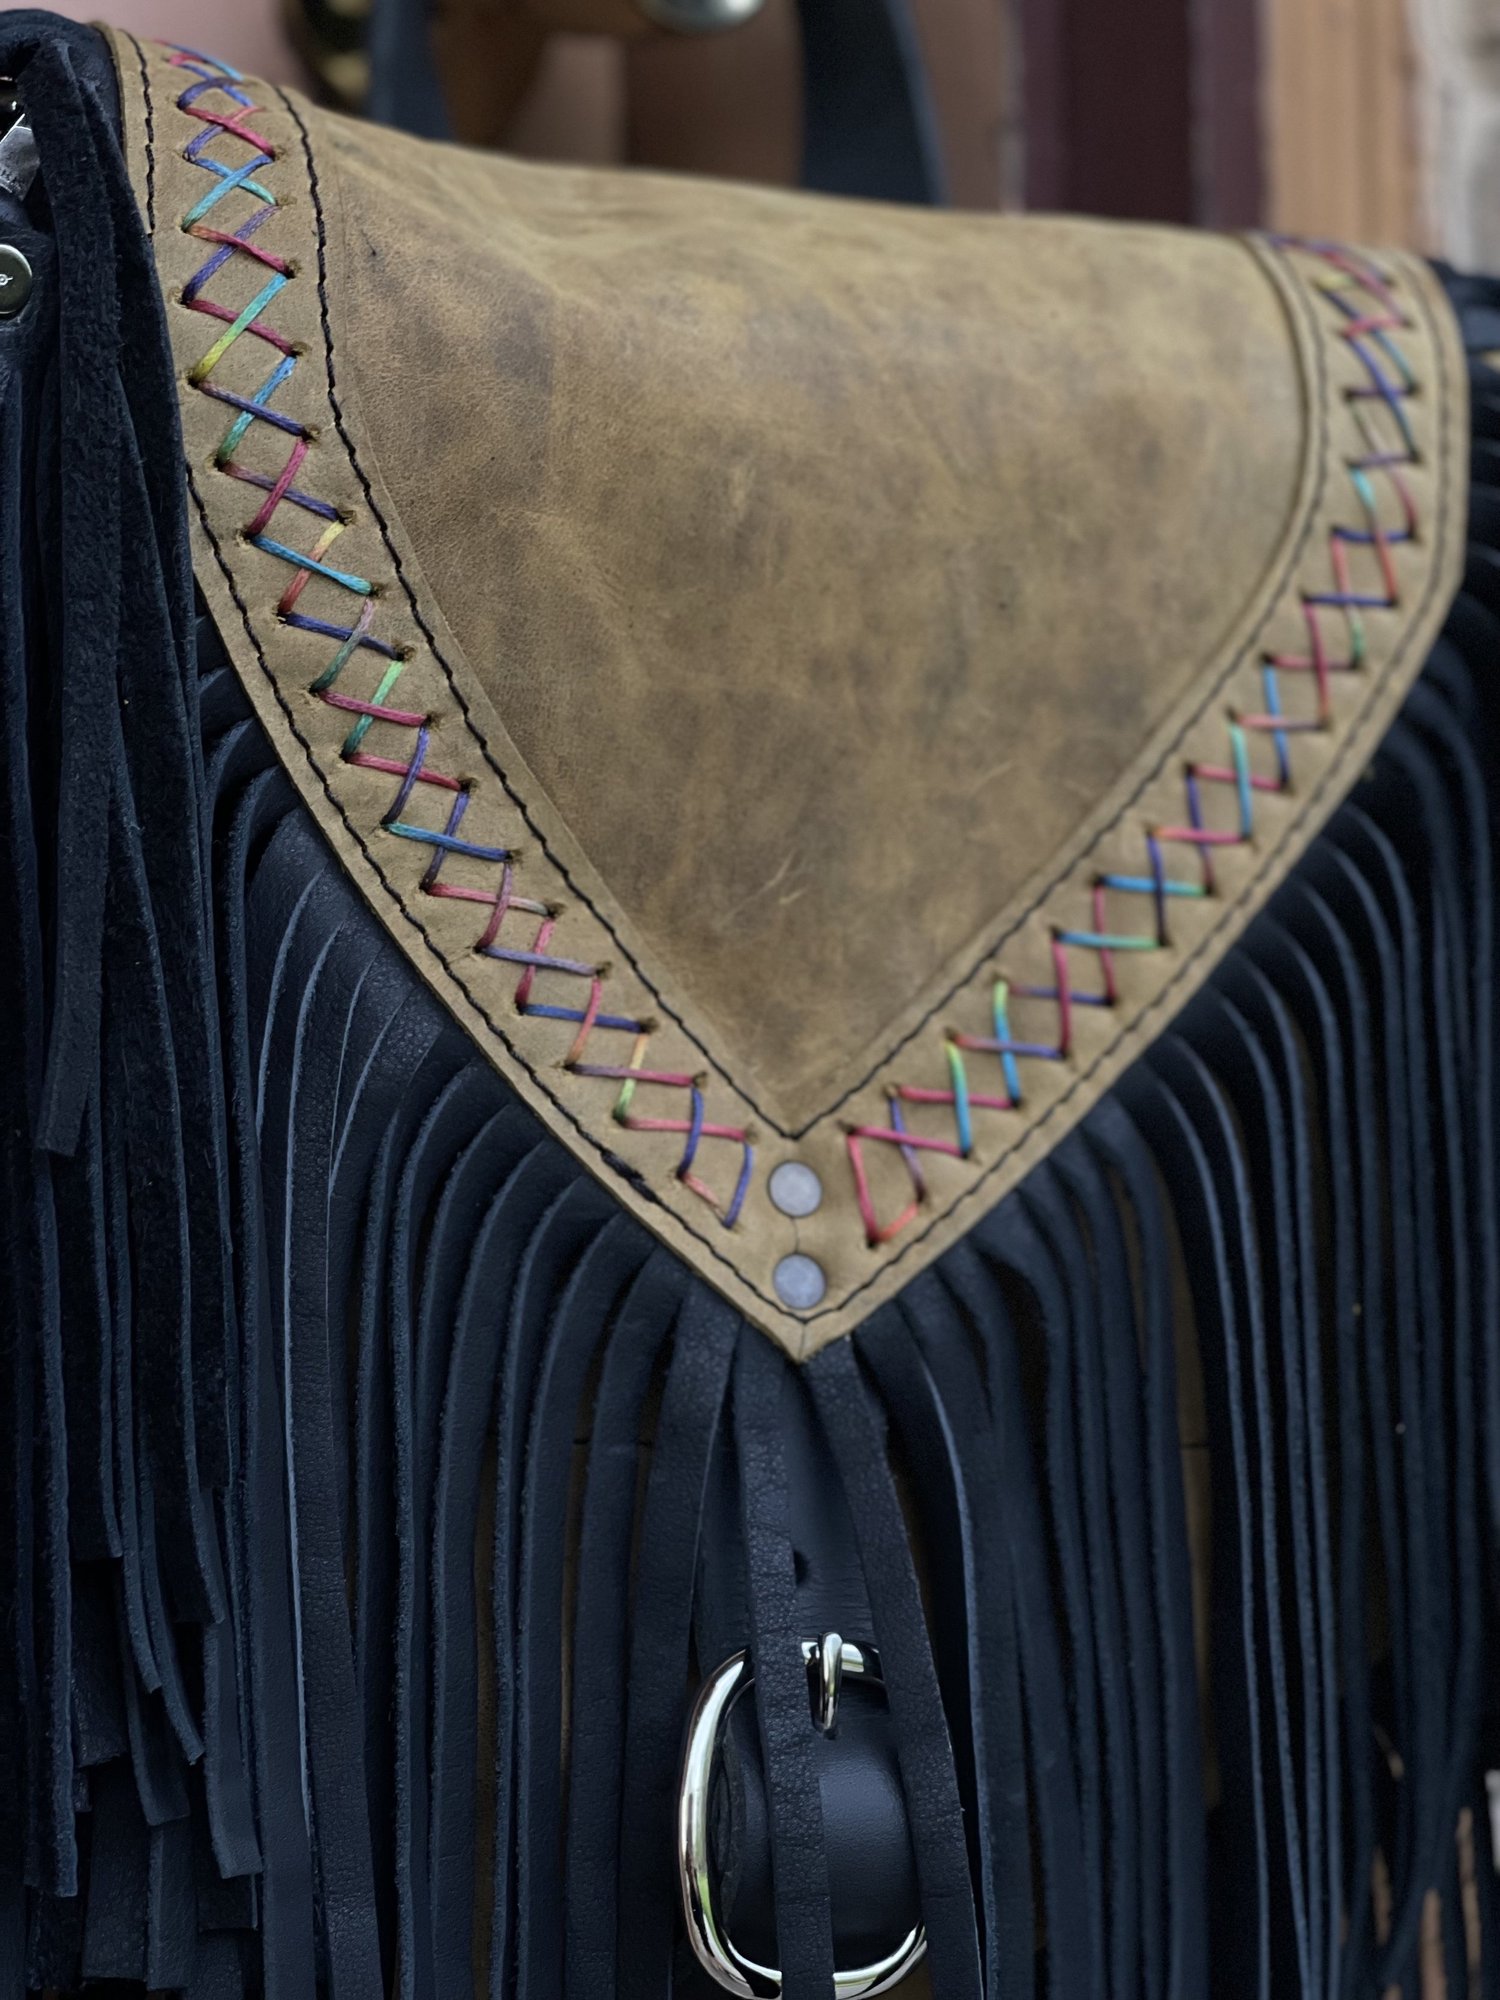 Boho Saddle Bag with Fringe - Small - Artisan Collection - Full Leather - Deep Emerald